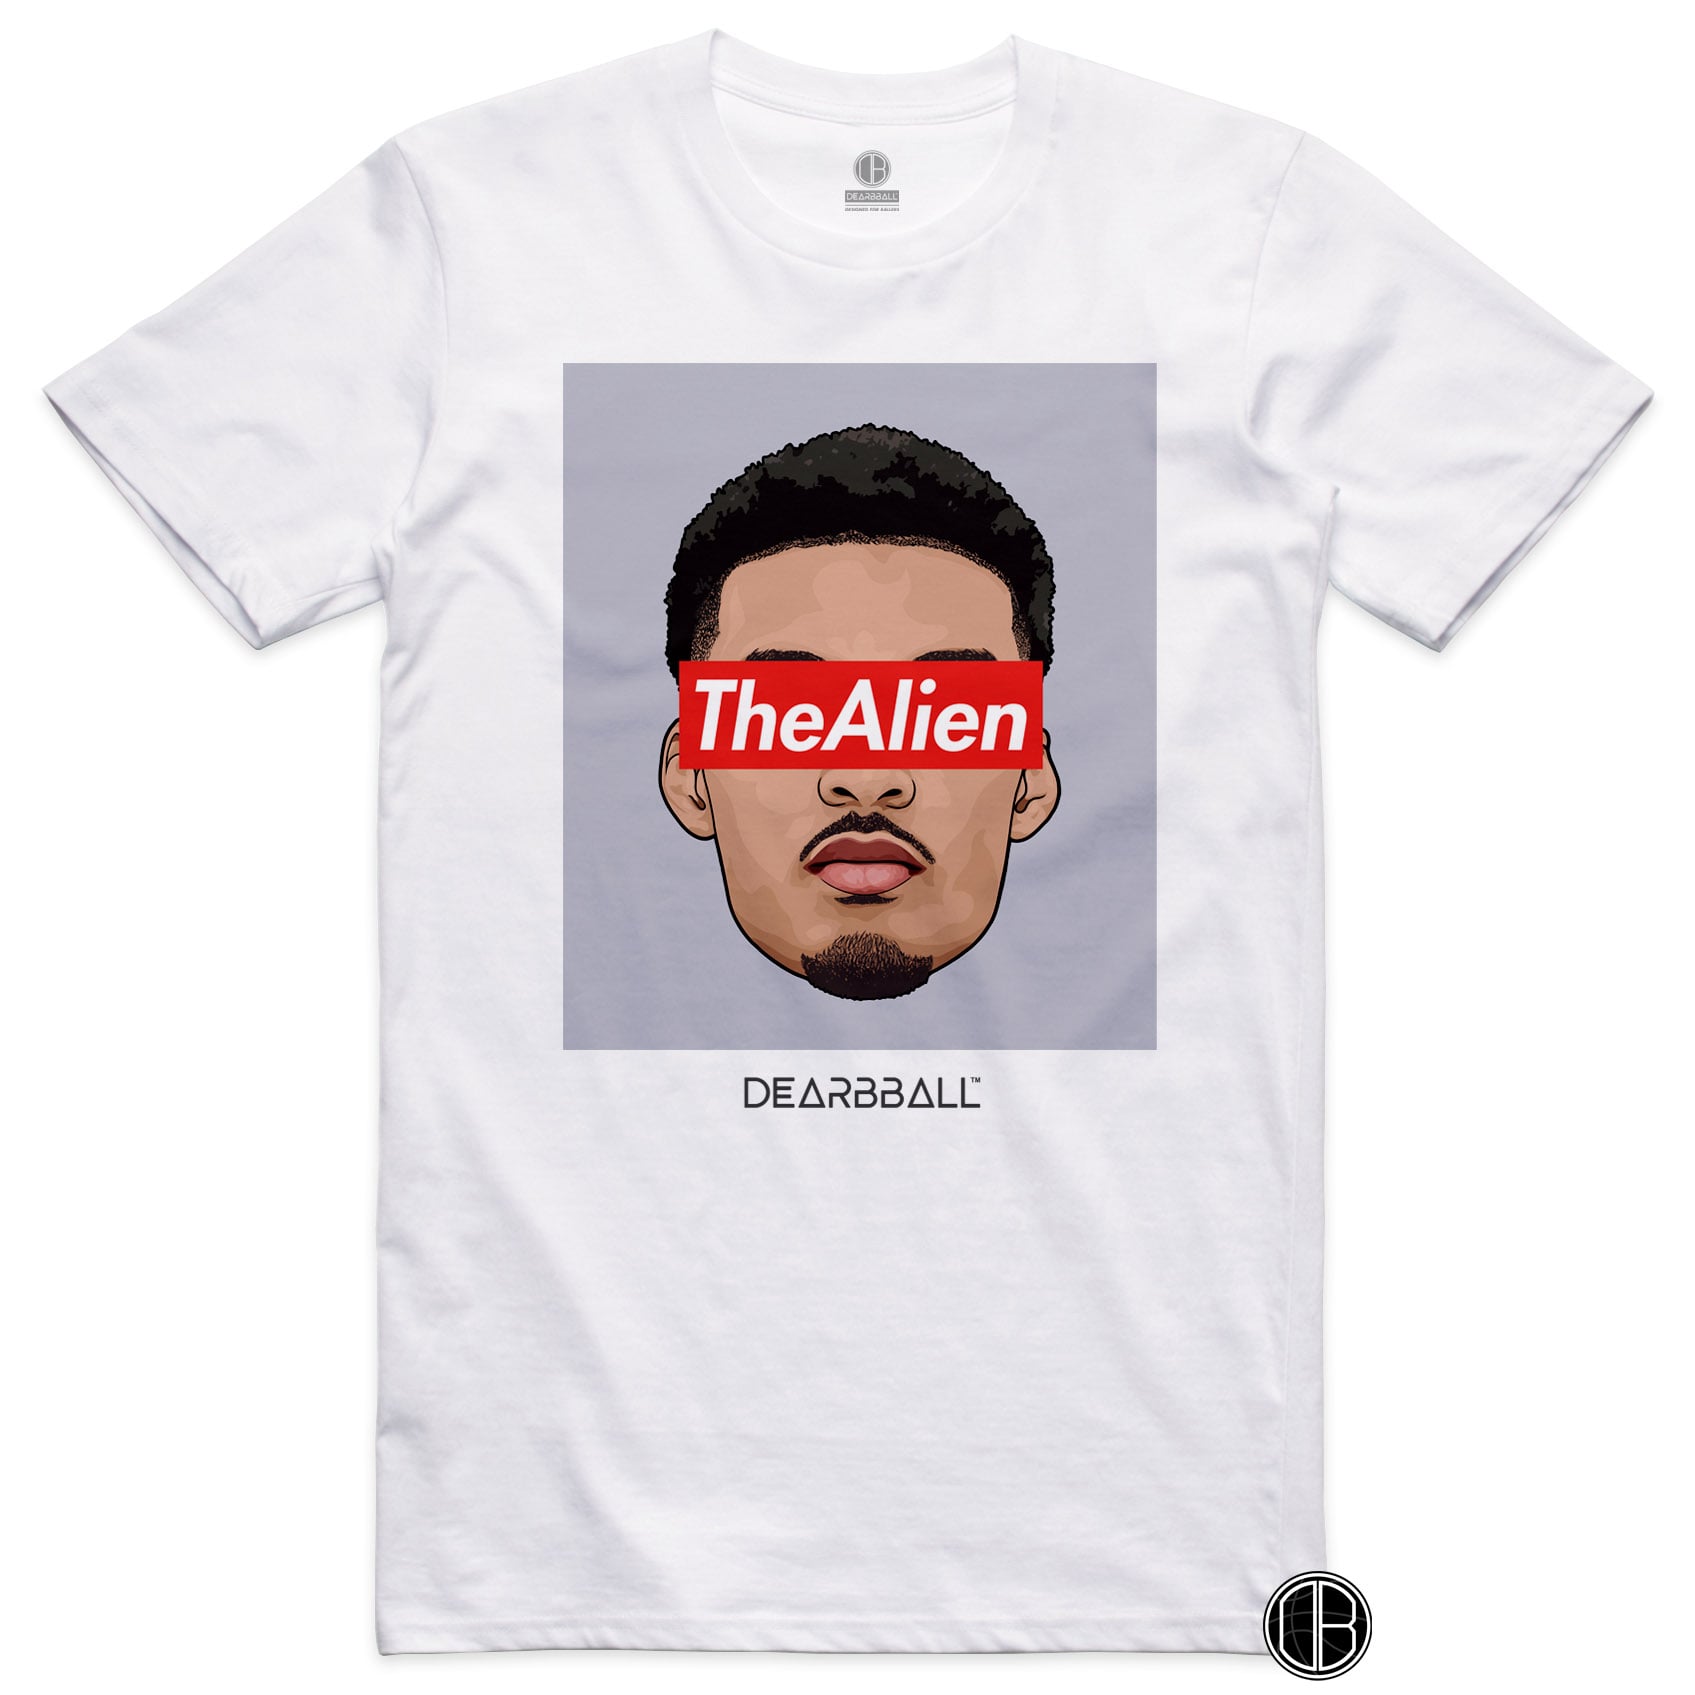 [CHILD] DearBBall T-Shirt - TheAlien Limited Edition